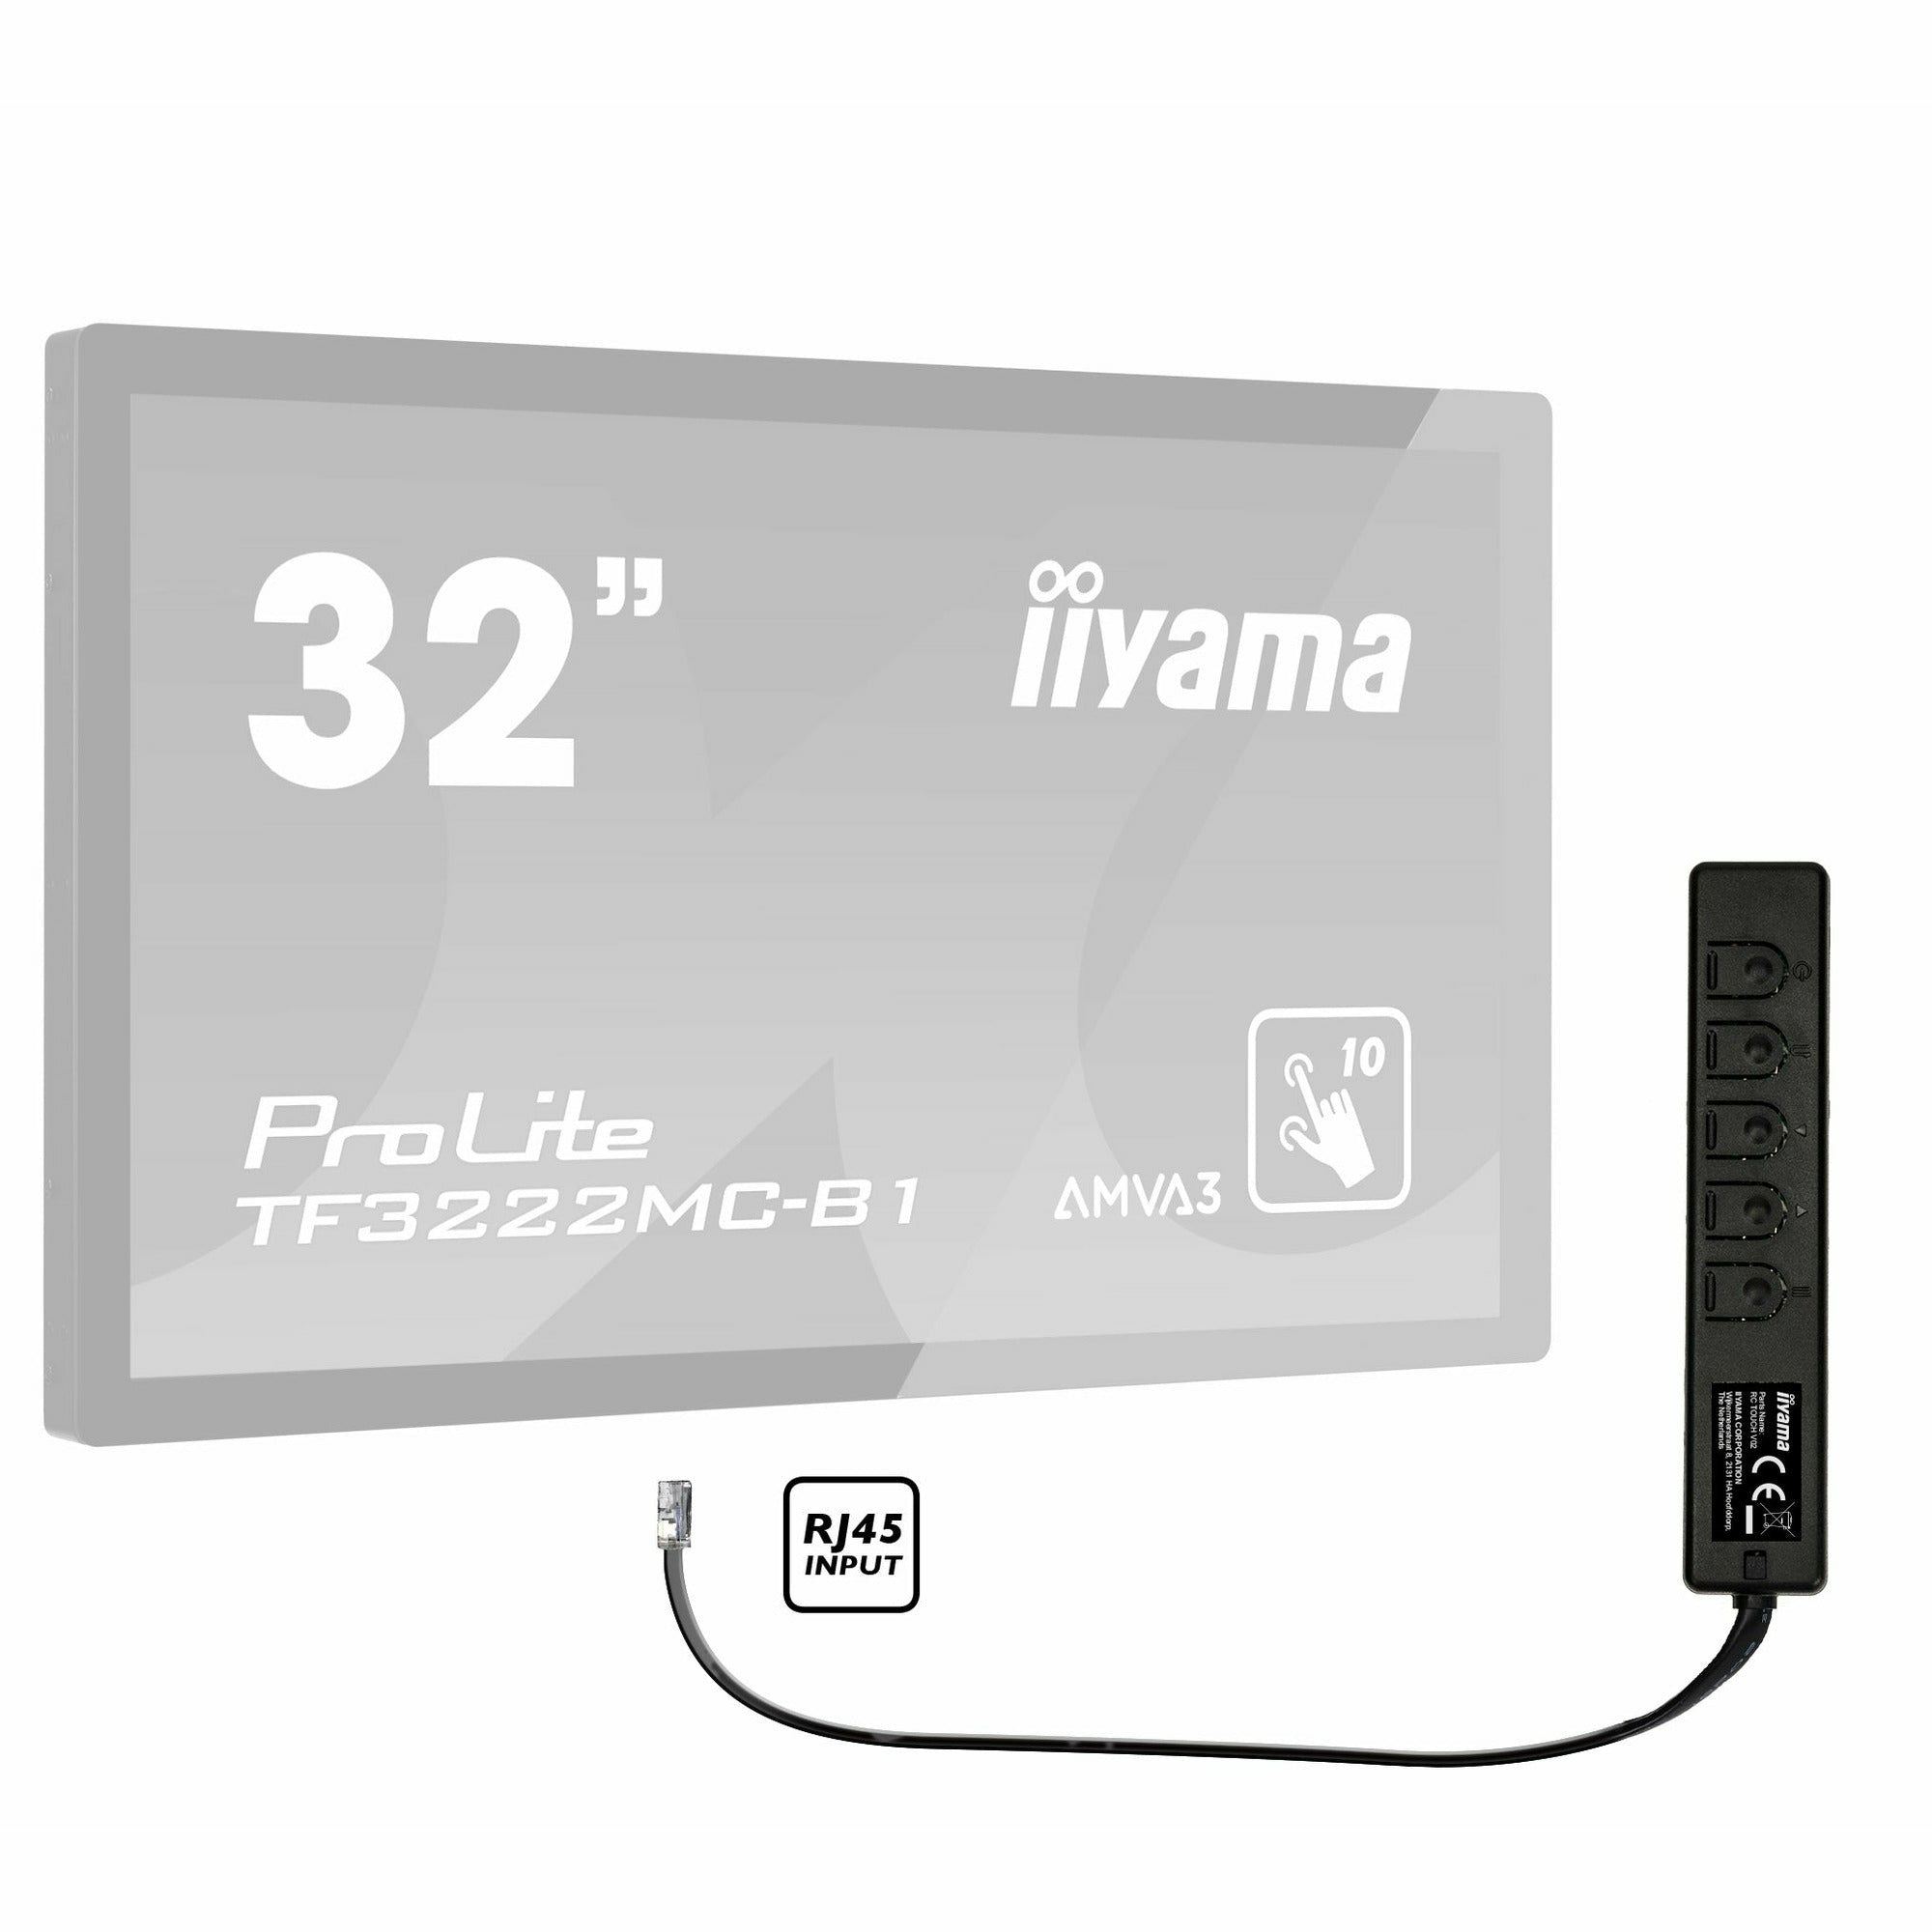 Iiyama External Control Pad for T(F)xx34 Series Touchscreens